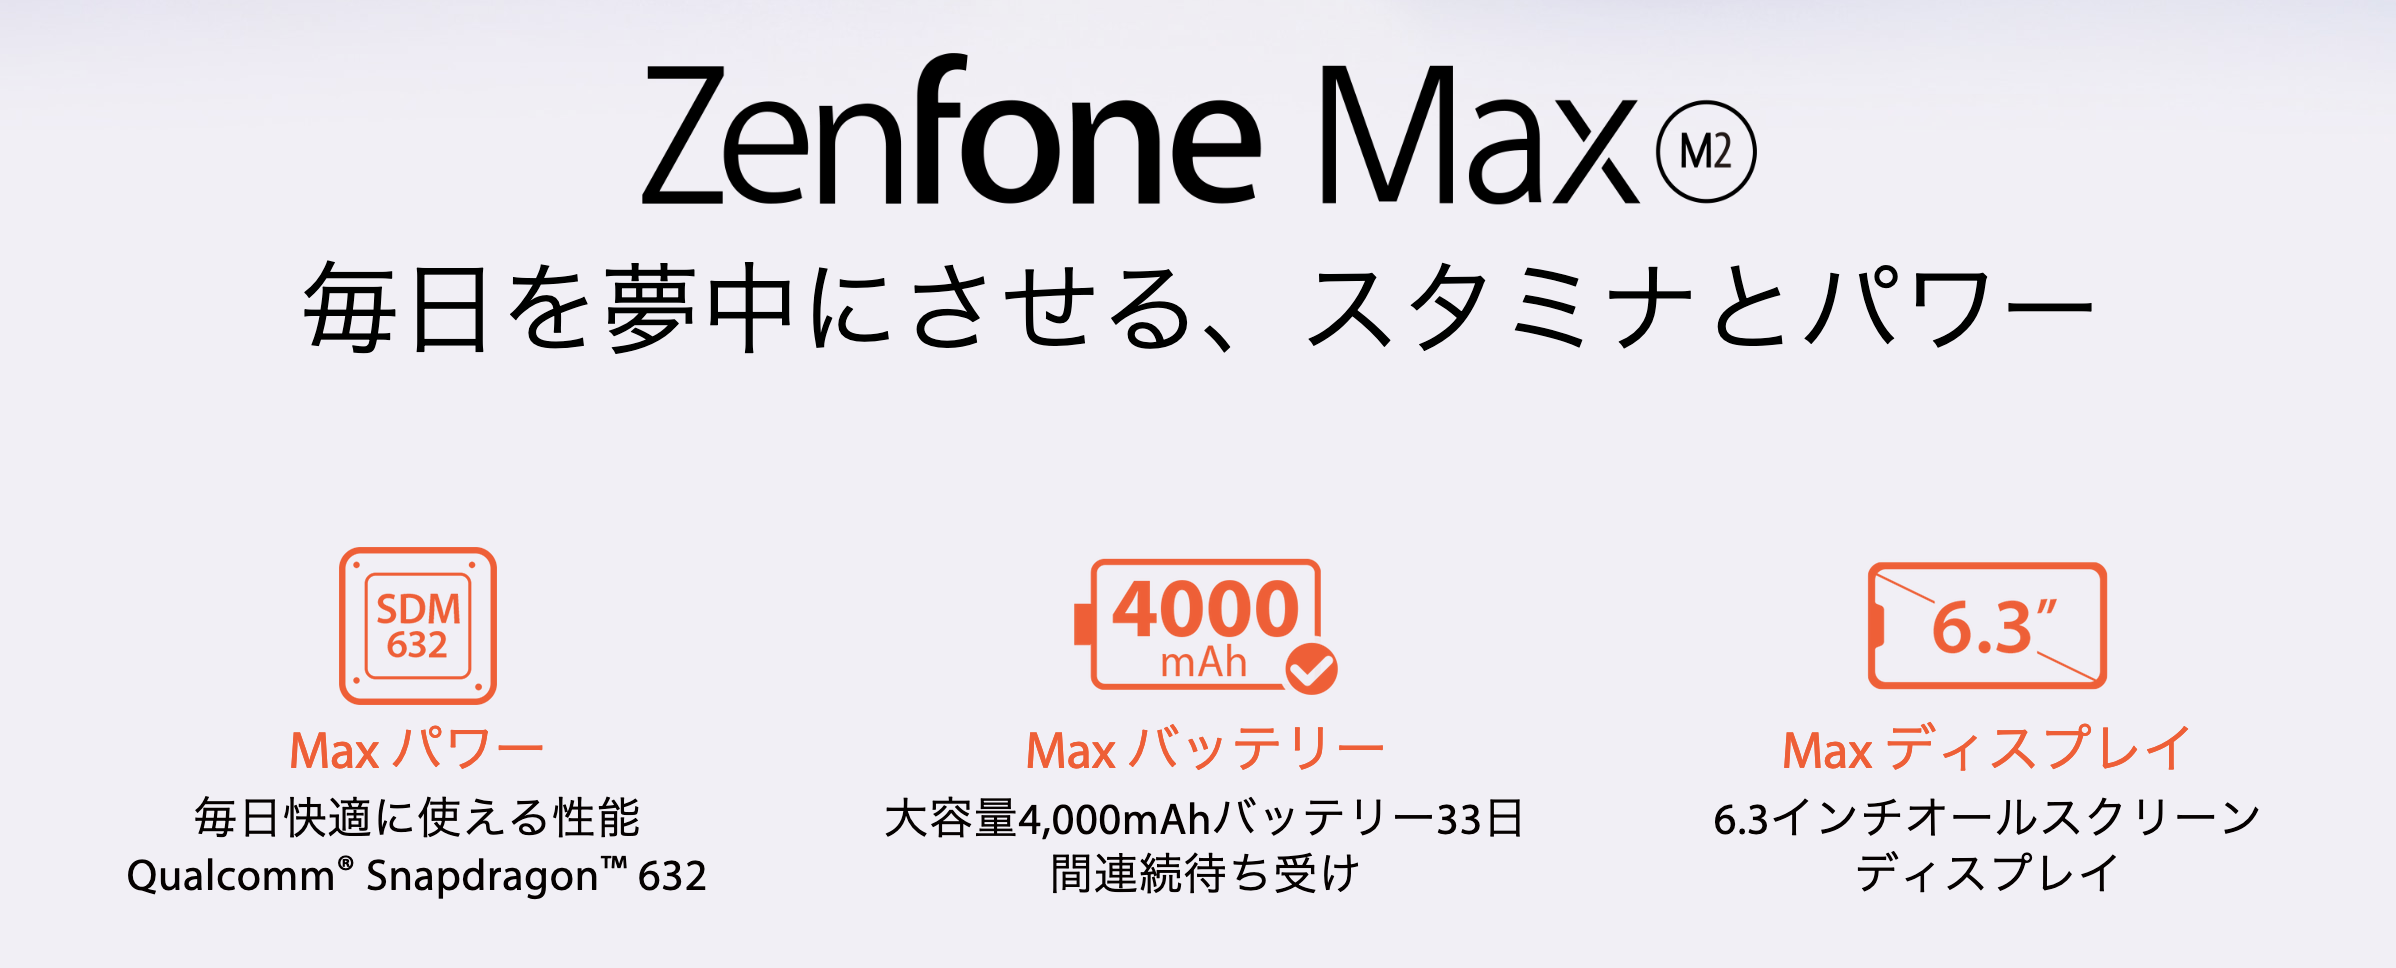 Zenfone Max (M2)